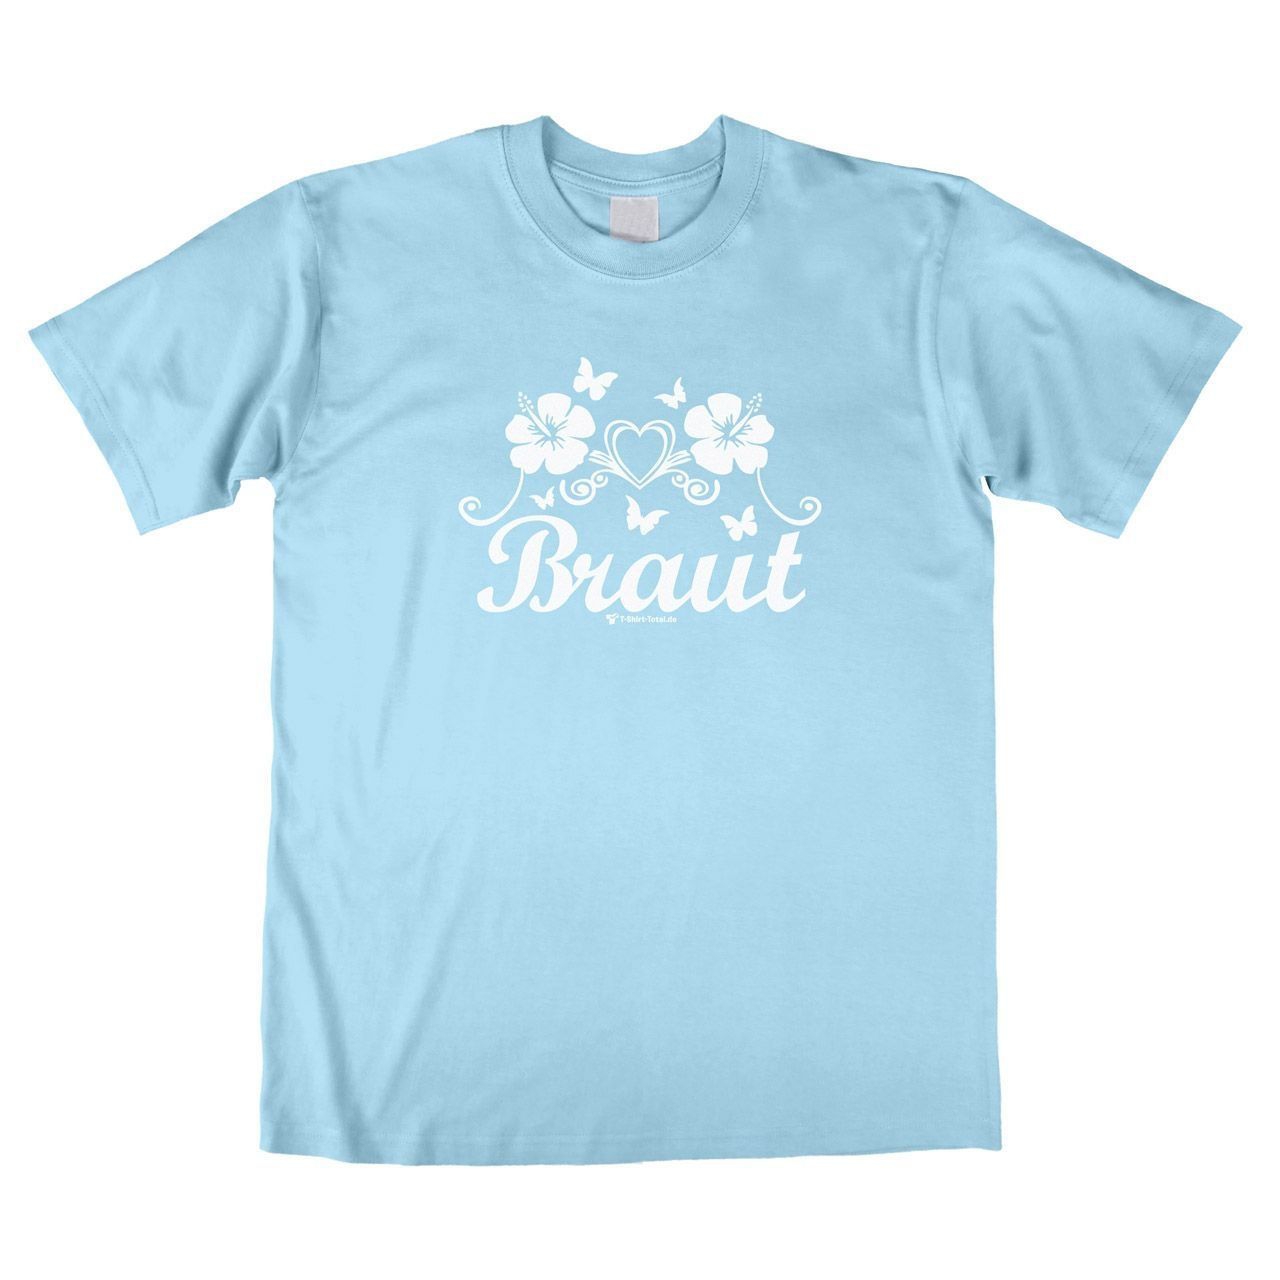 Die Braut Unisex T-Shirt hellblau Small